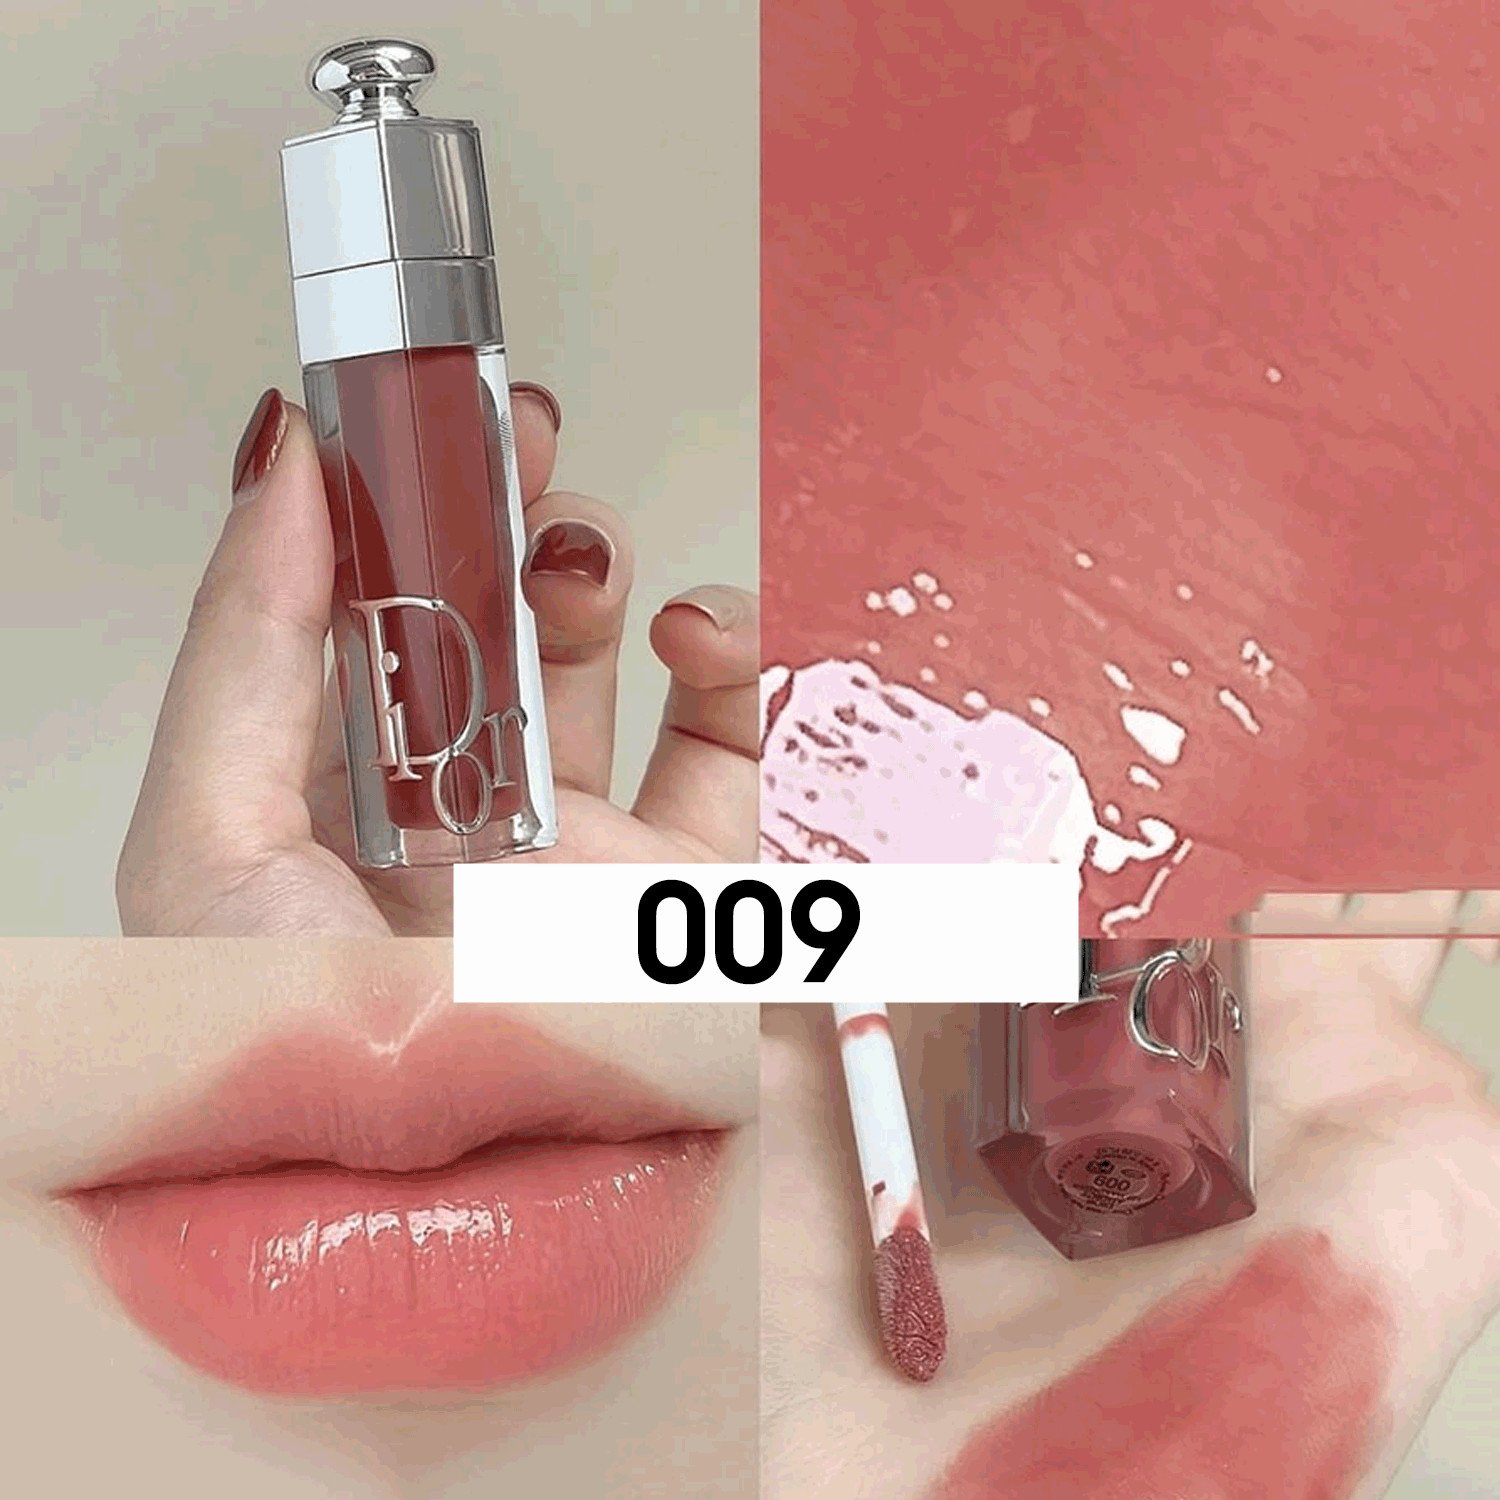 Son dưỡng Dior Addict Lip Glow 010 Holo Pink  Japan Market